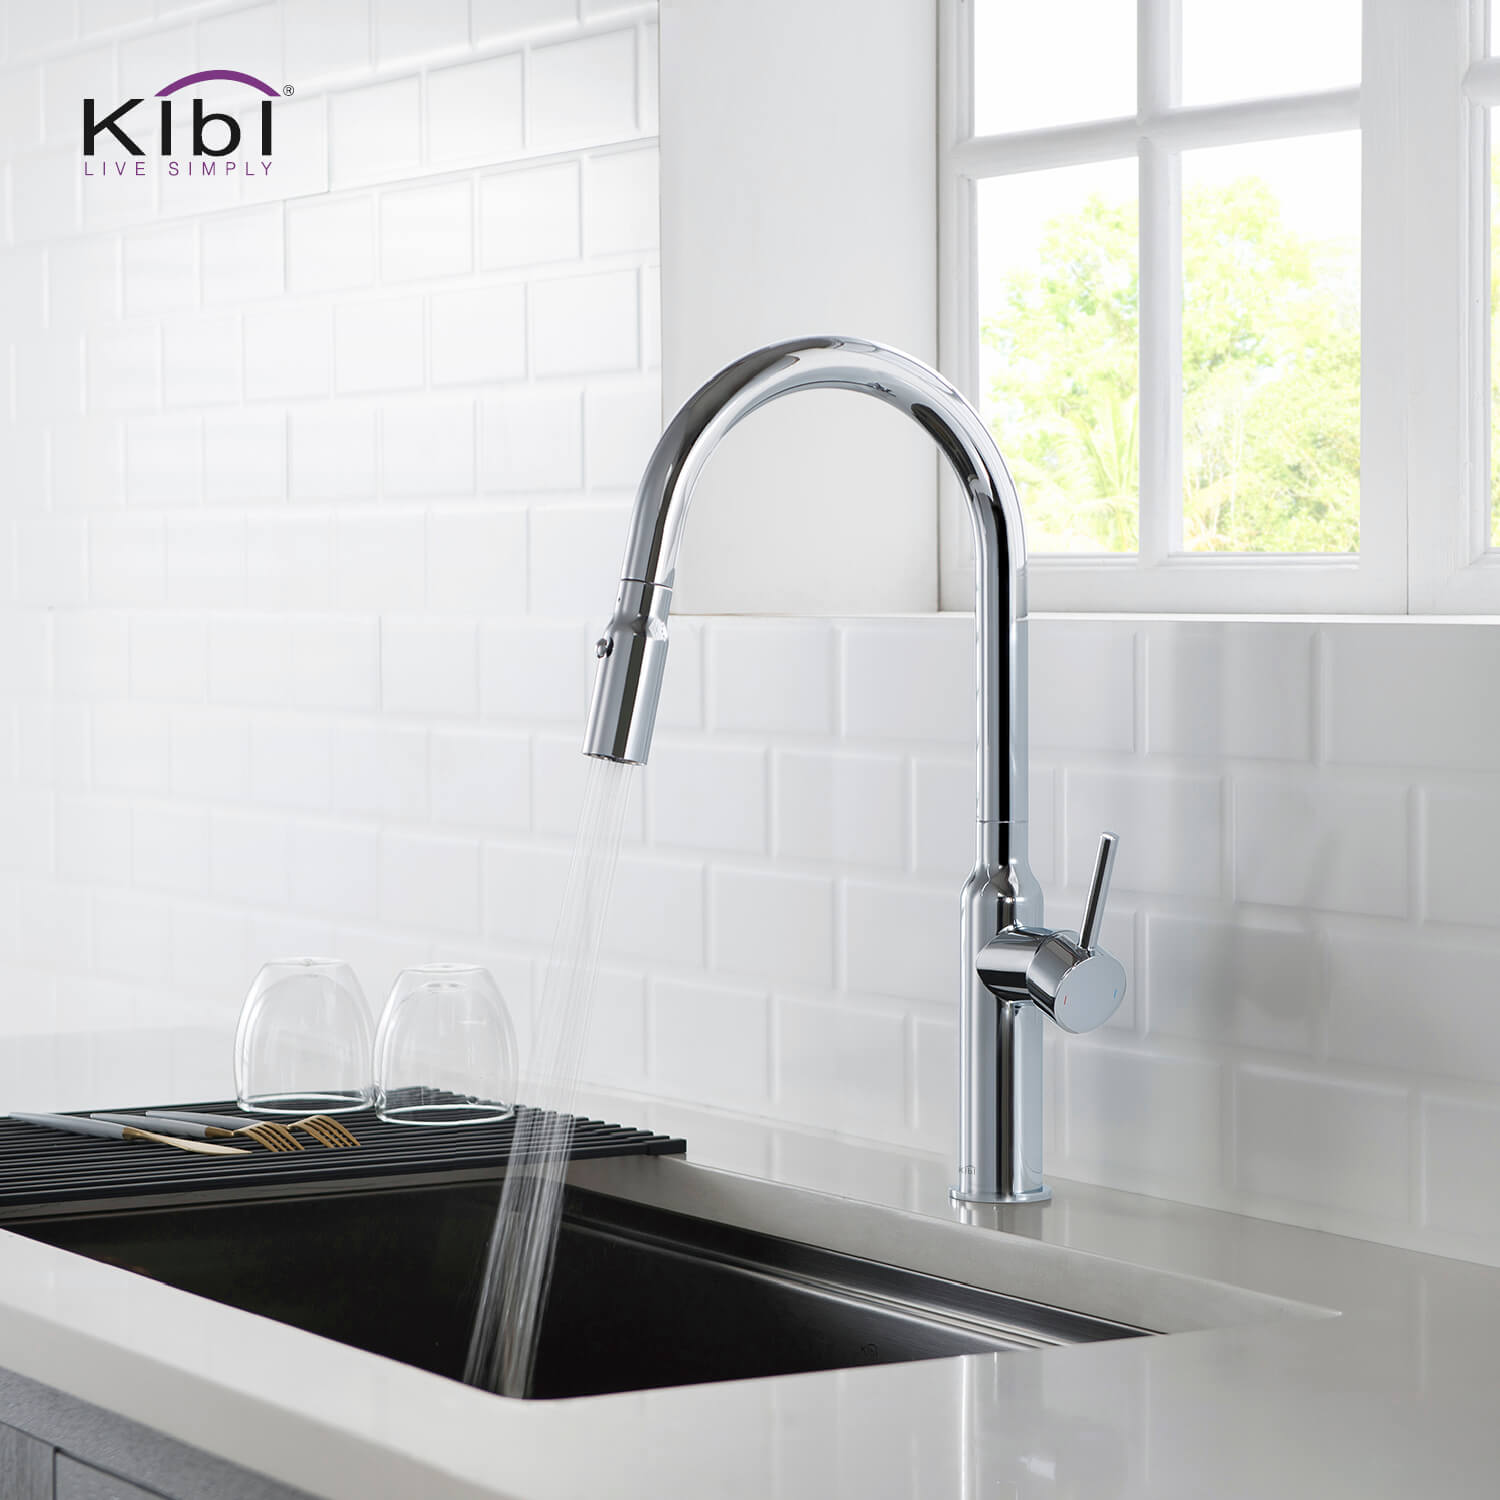 Kibi Hilo Single Handle High Arc Pull Down Kitchen Faucet in Chrome Finish